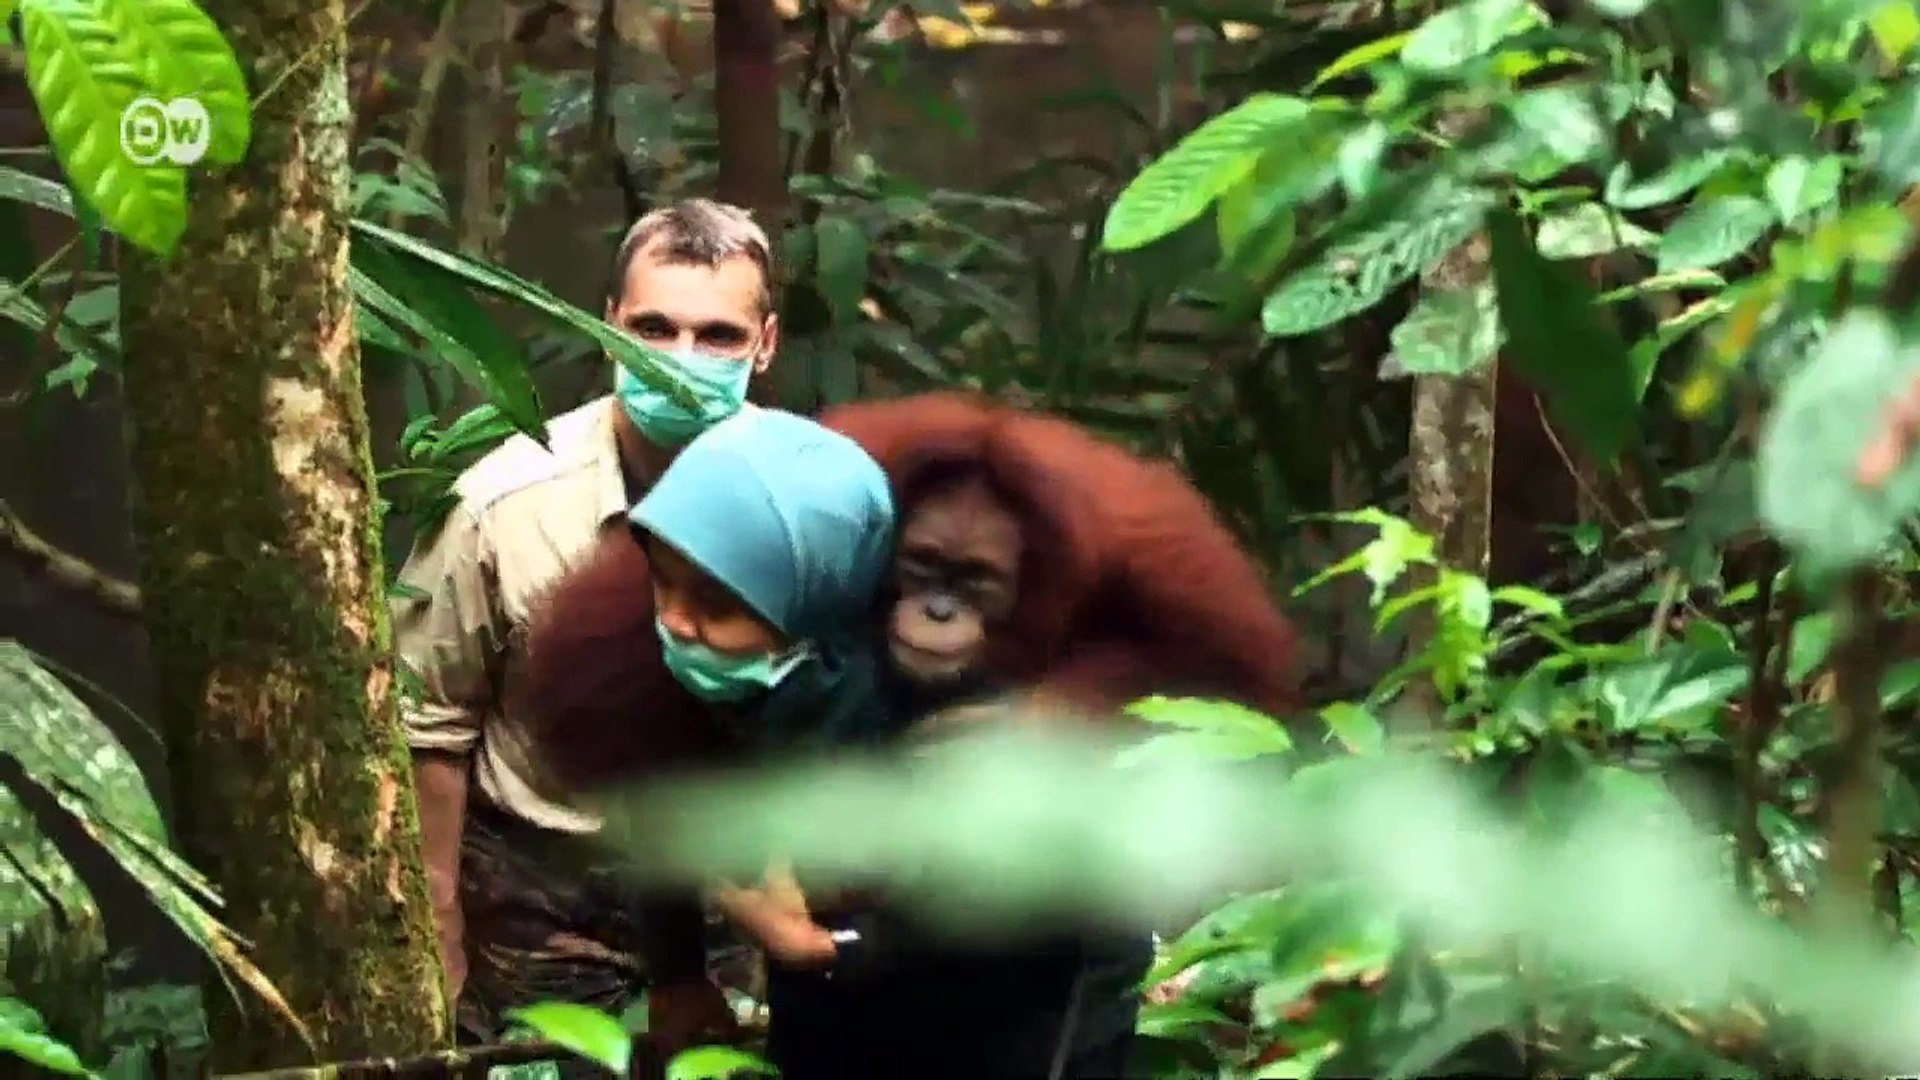 Indonesia - Help for Orangutans | Global 3000